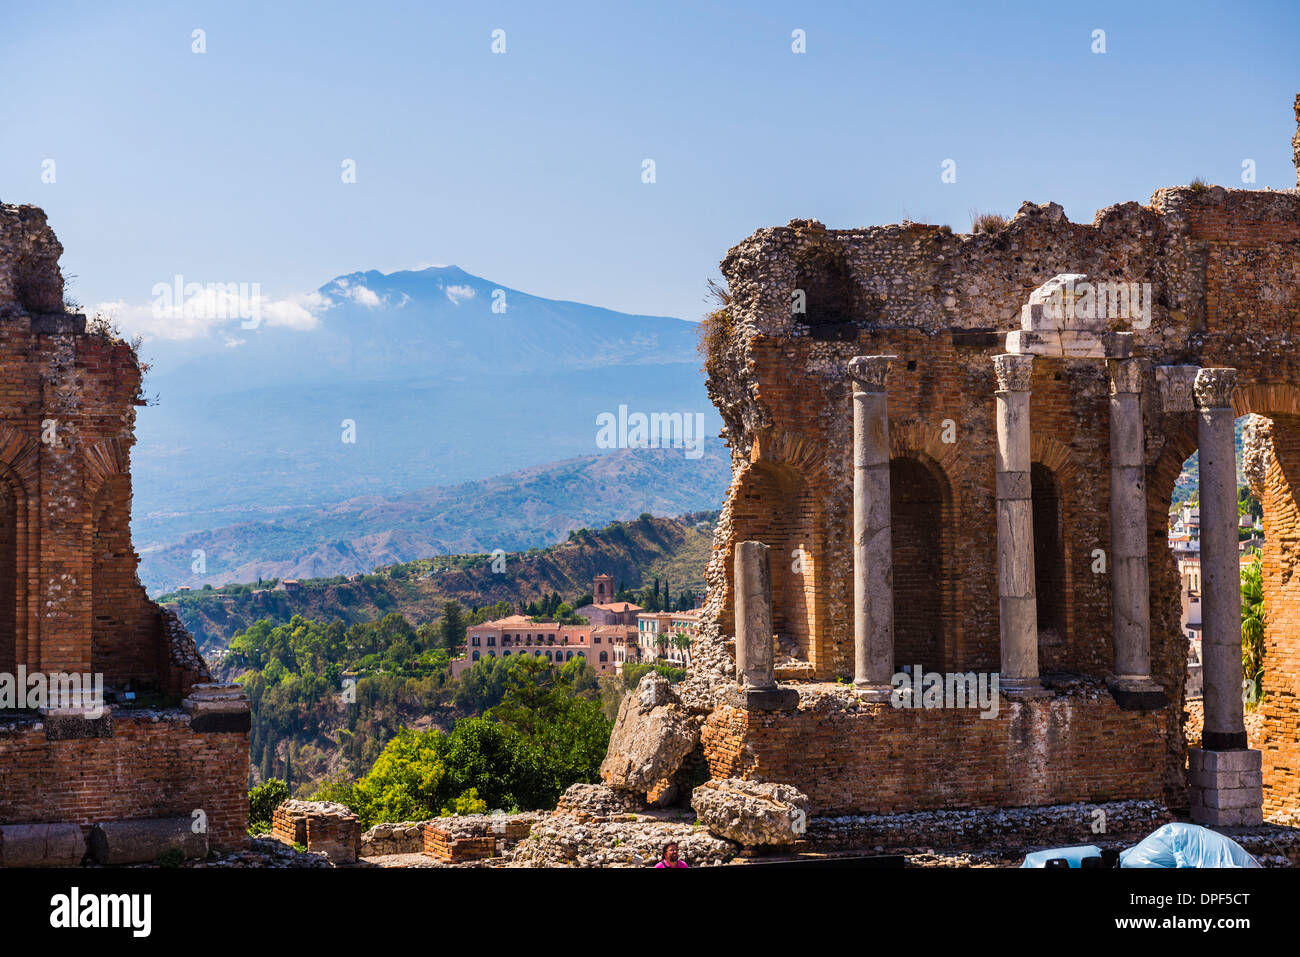 Teatro Greco (Greek Theatre), ruins of columns at the amphitheatre, and Mount Etna volcano, Taormina, Sicily, Italy, Europe Stock Photo